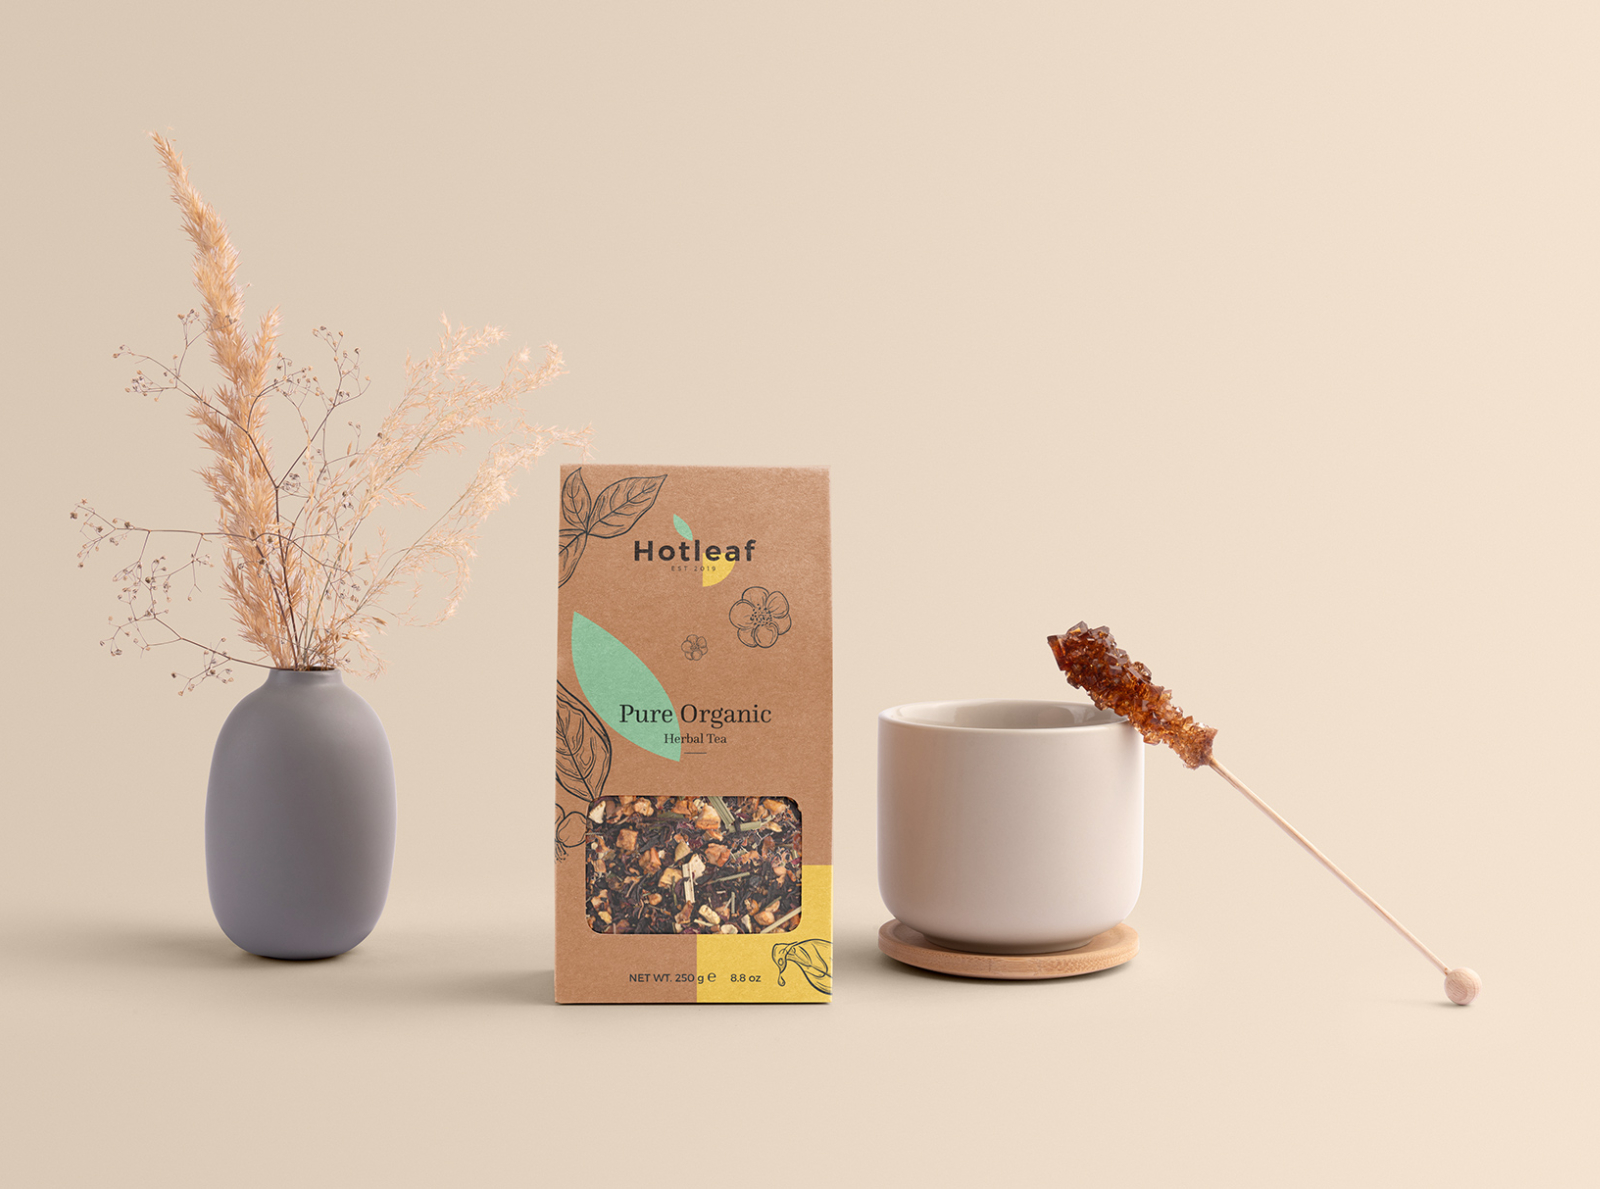 Hotleaf - Teahouse Branding Mockup Kit by Mockup Cloud on Dribbble